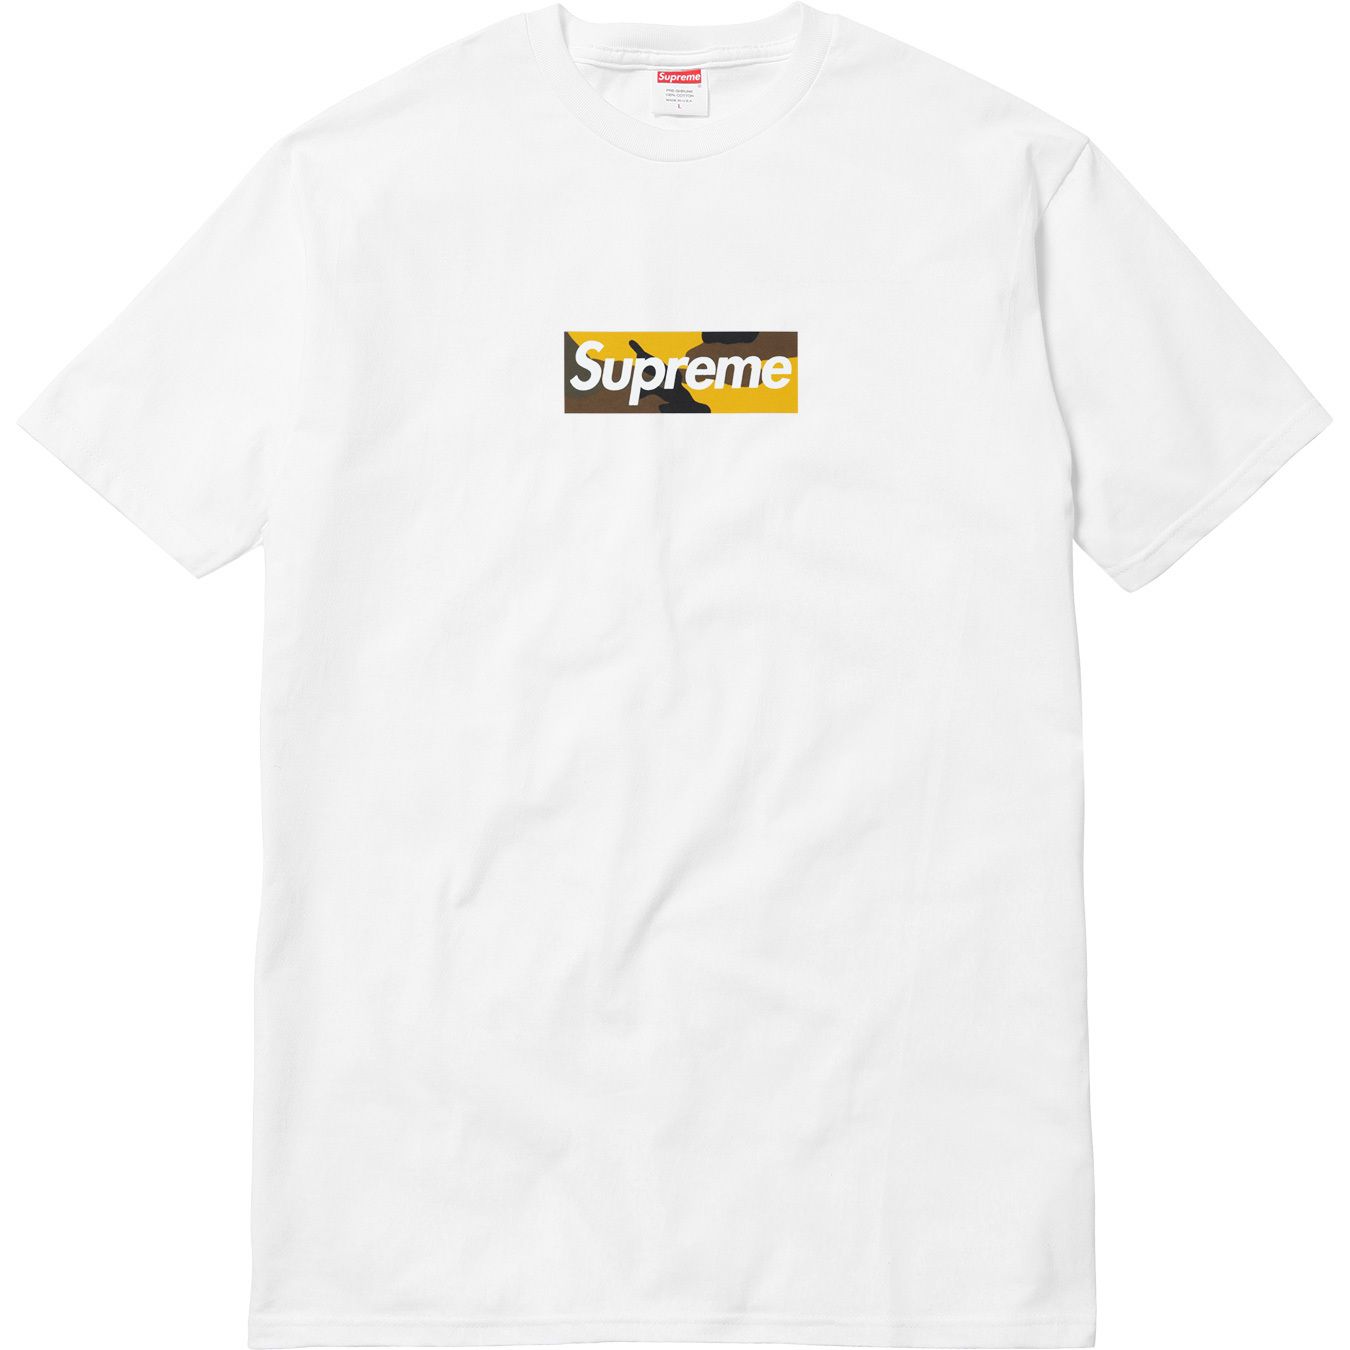 2019FW Bandana Box Logo T-shirt Men's Ladies Hip-hop Summer Brand 